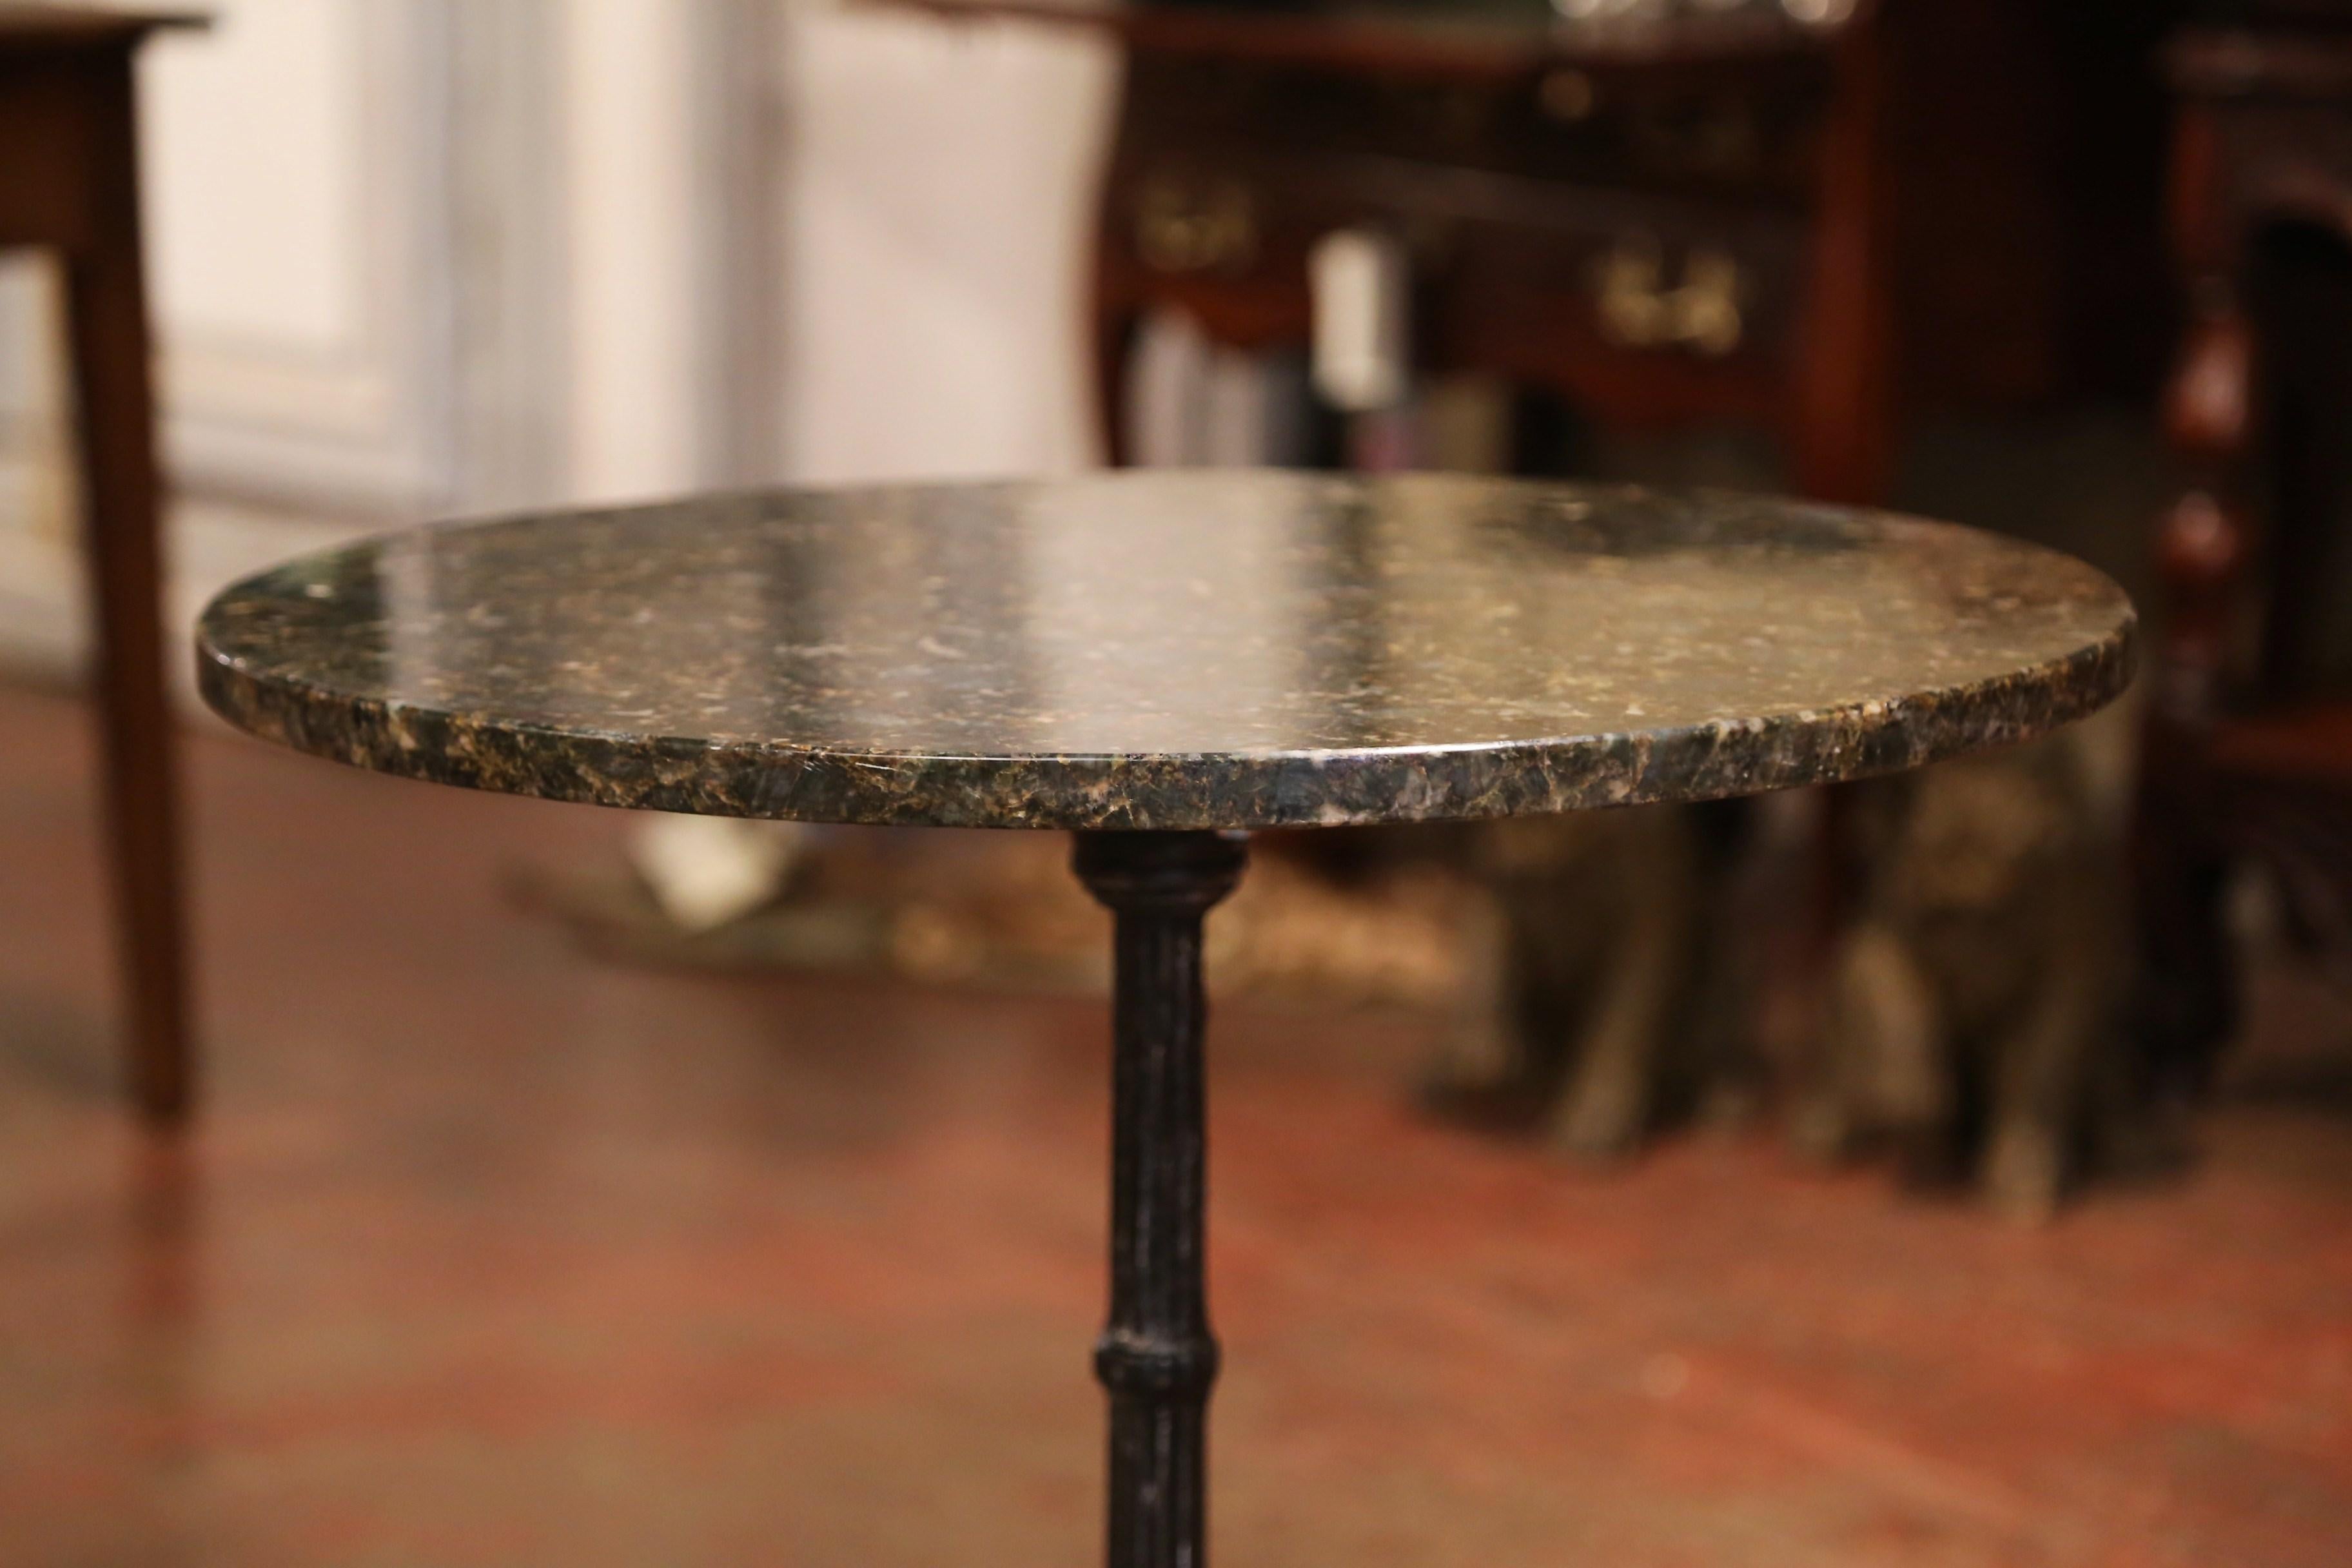 19th Century Parisian Iron Bistrot Pedestal Table with Black Marble Top (19. Jahrhundert)